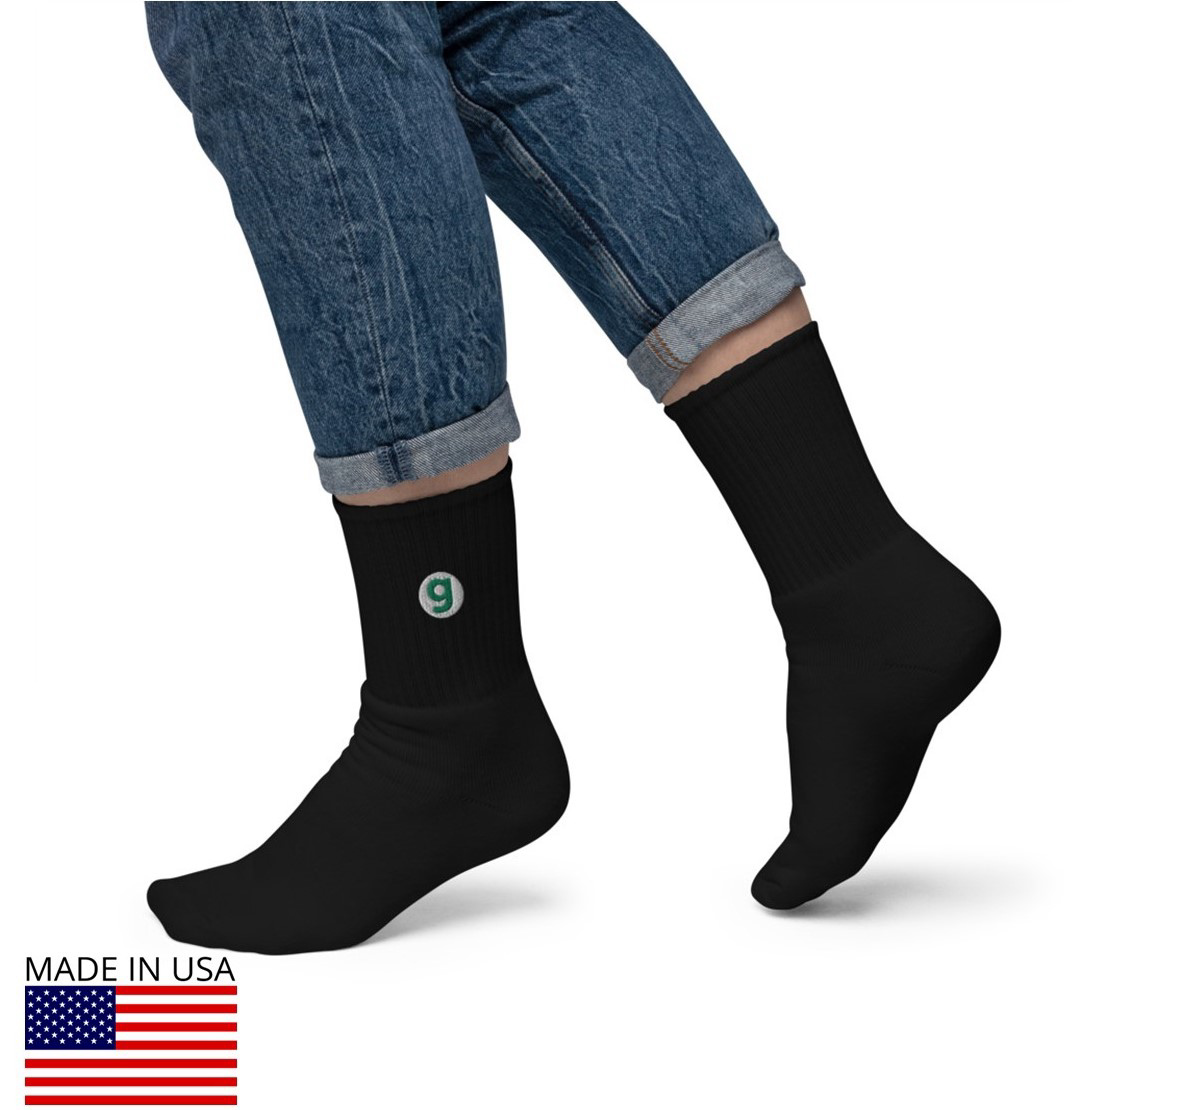 Green G Embroidered Socks - Black / S/M